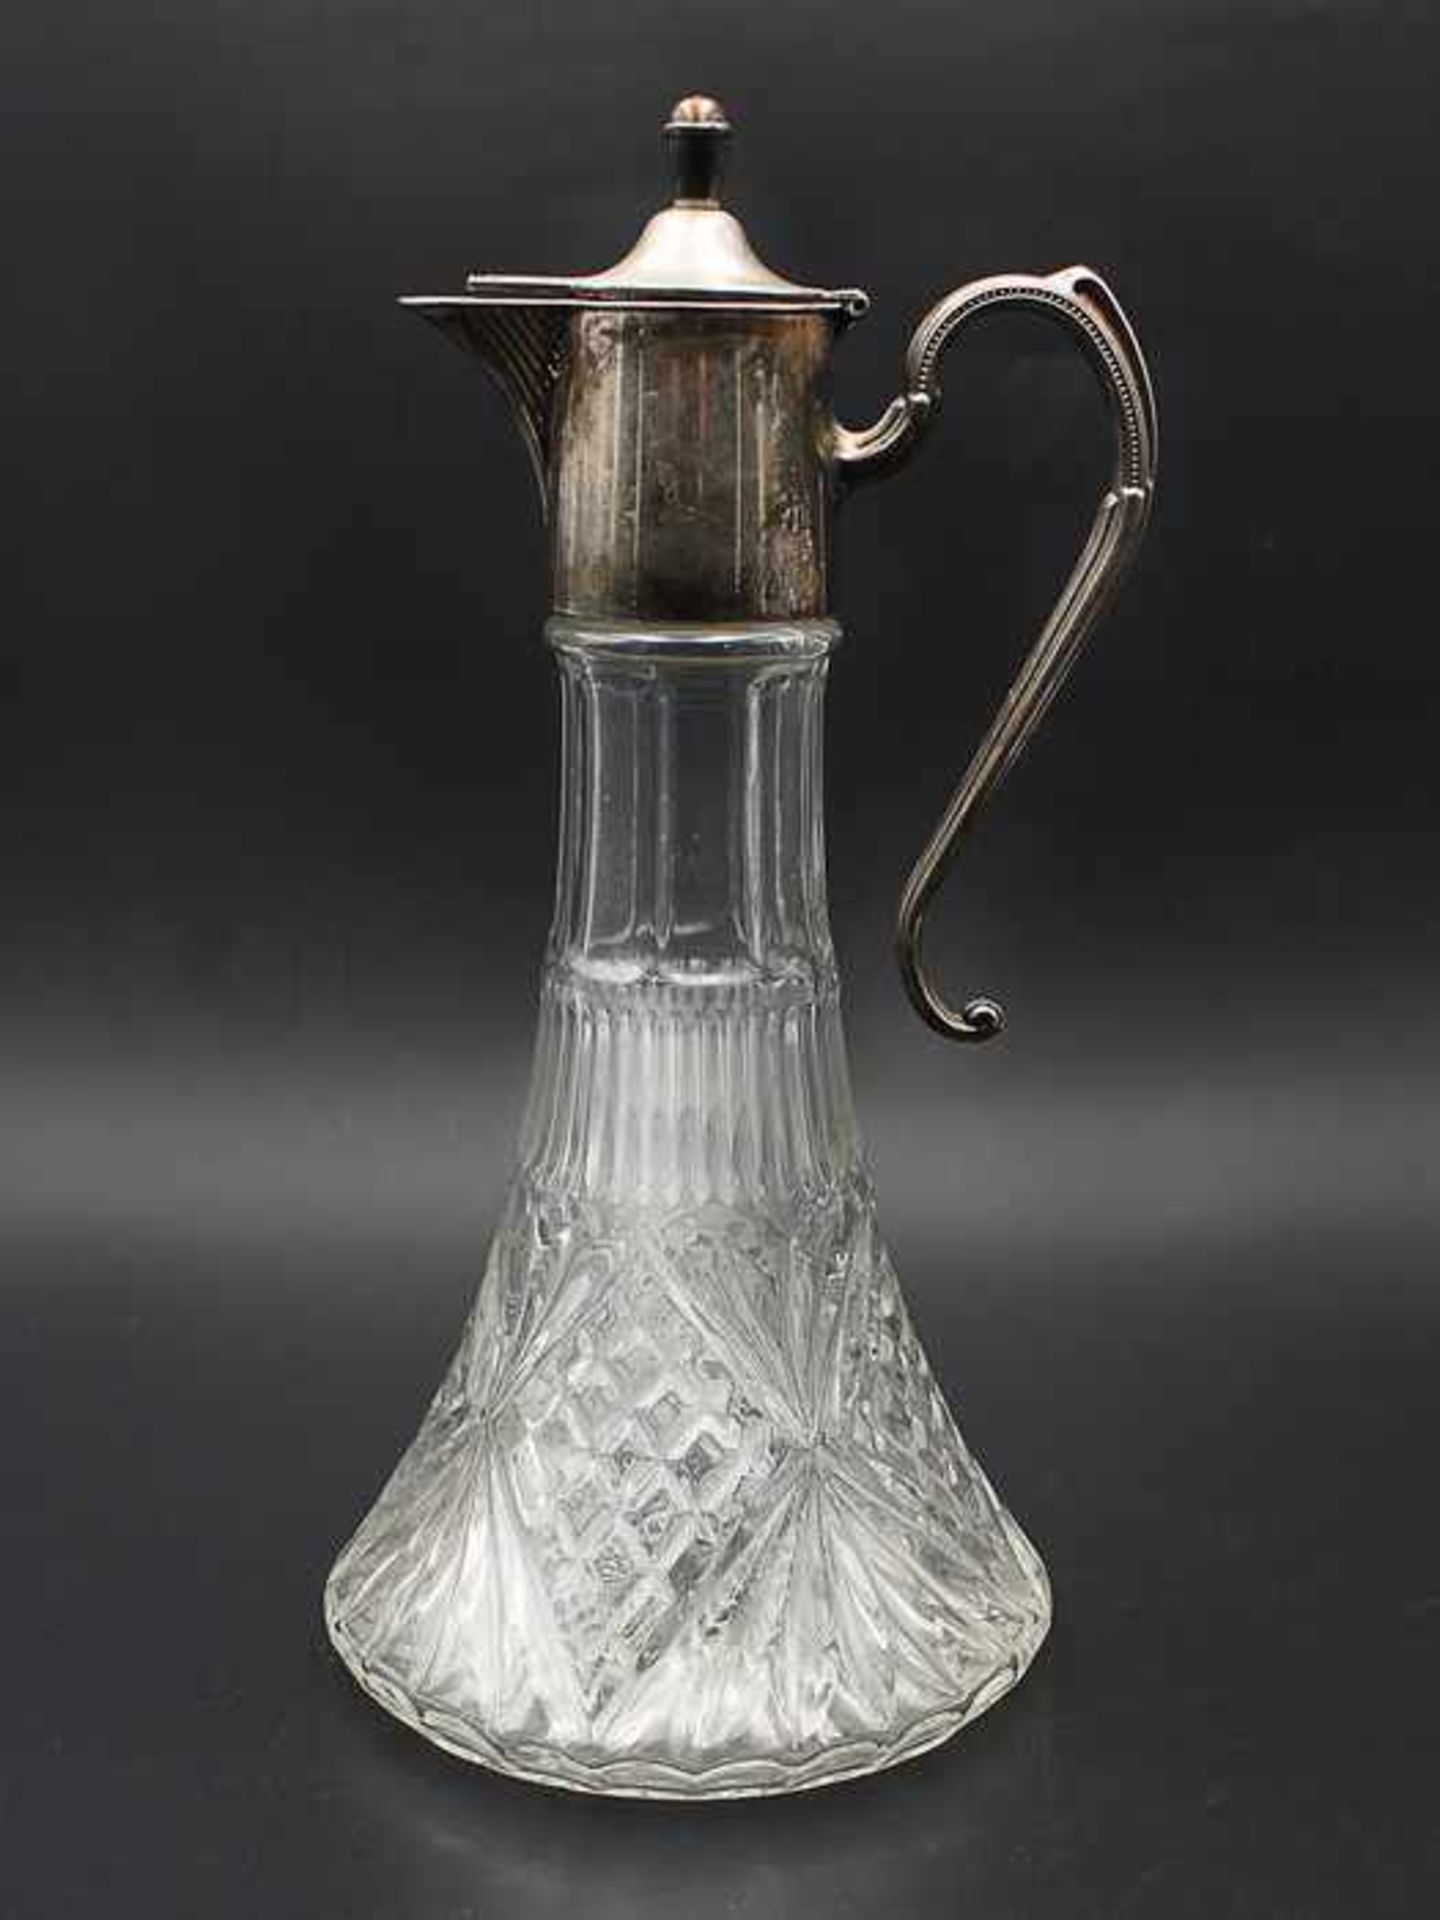 Weinkaraffe1.H. 20.Jh., England, Metall, versi., farbloser Pressglas, konischer Korpus, - Bild 2 aus 2